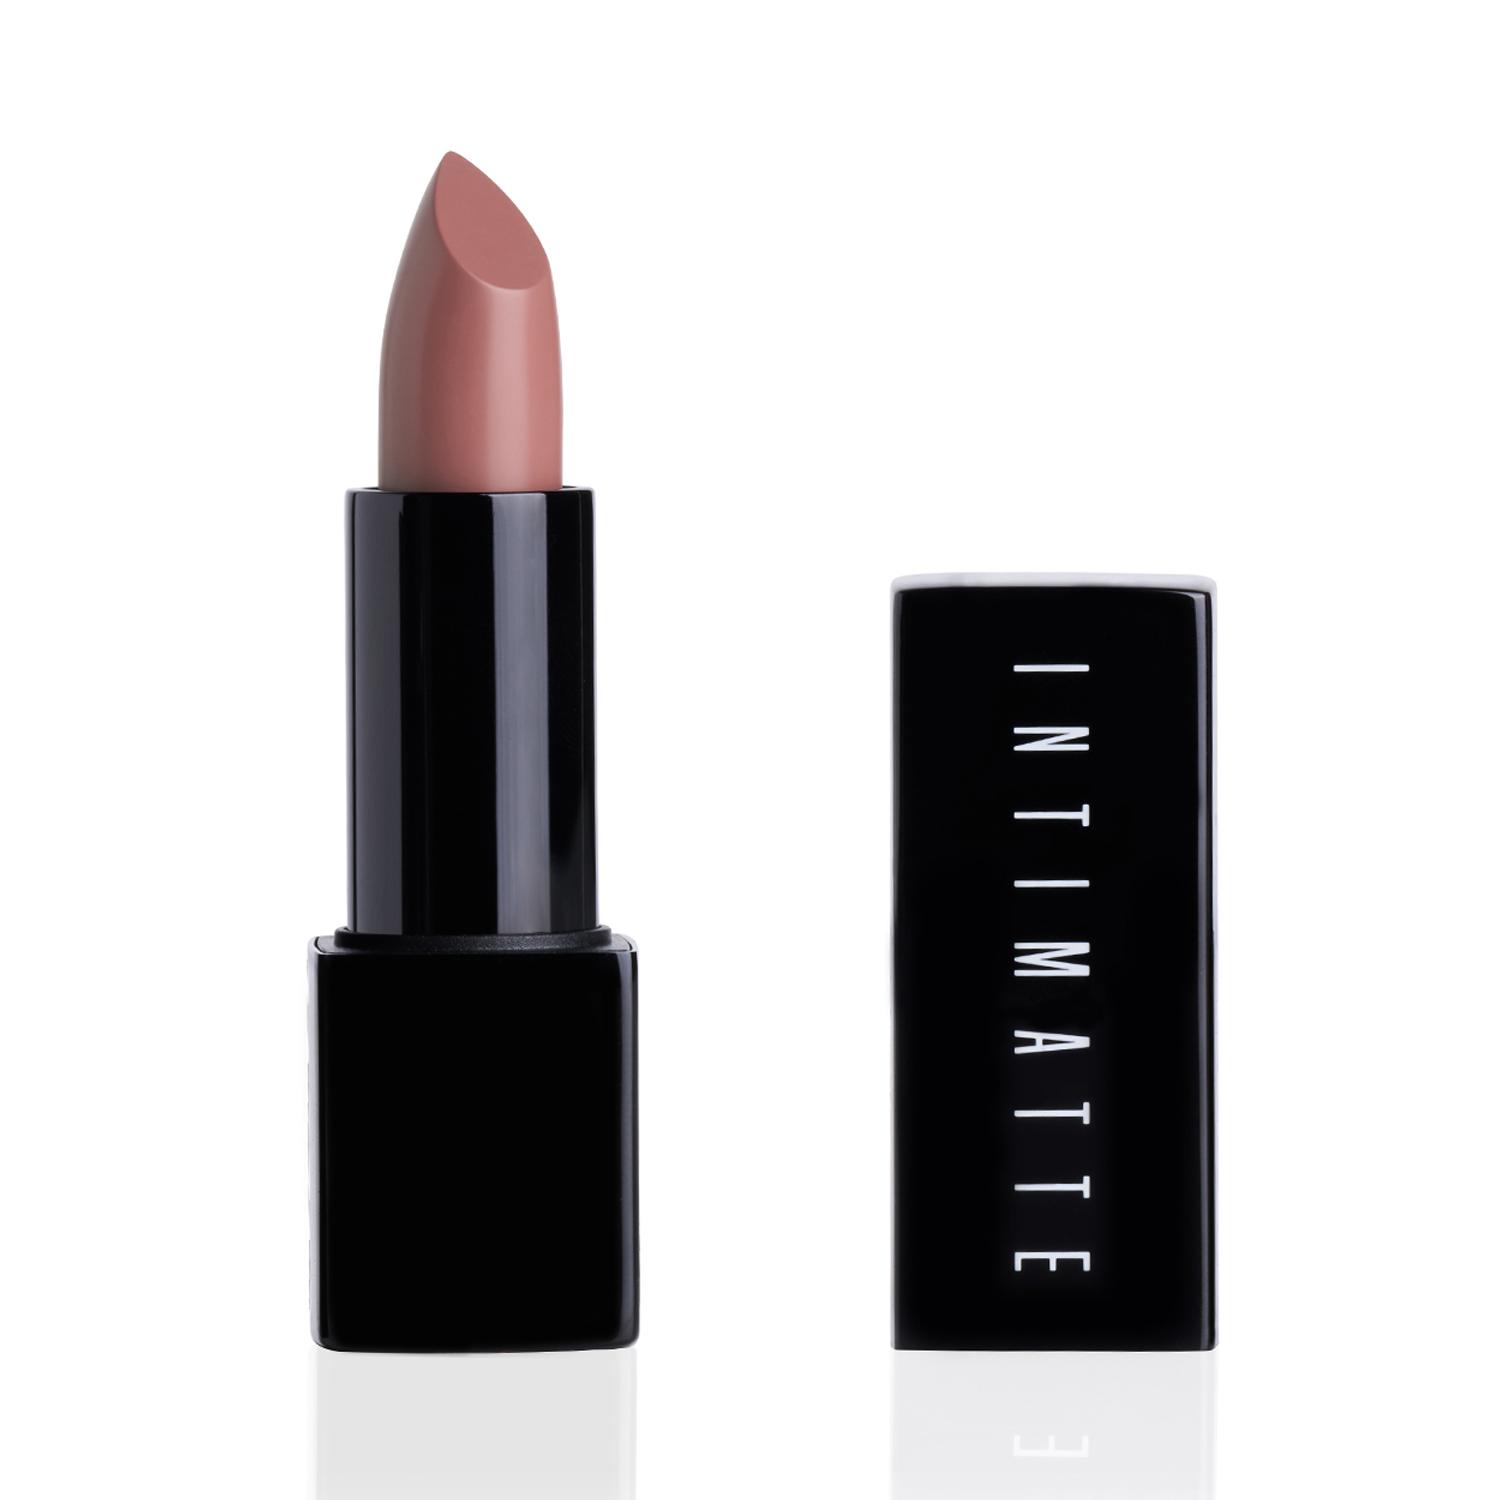 PAC | PAC Intimatte Lipstick - Bloomer (4g)